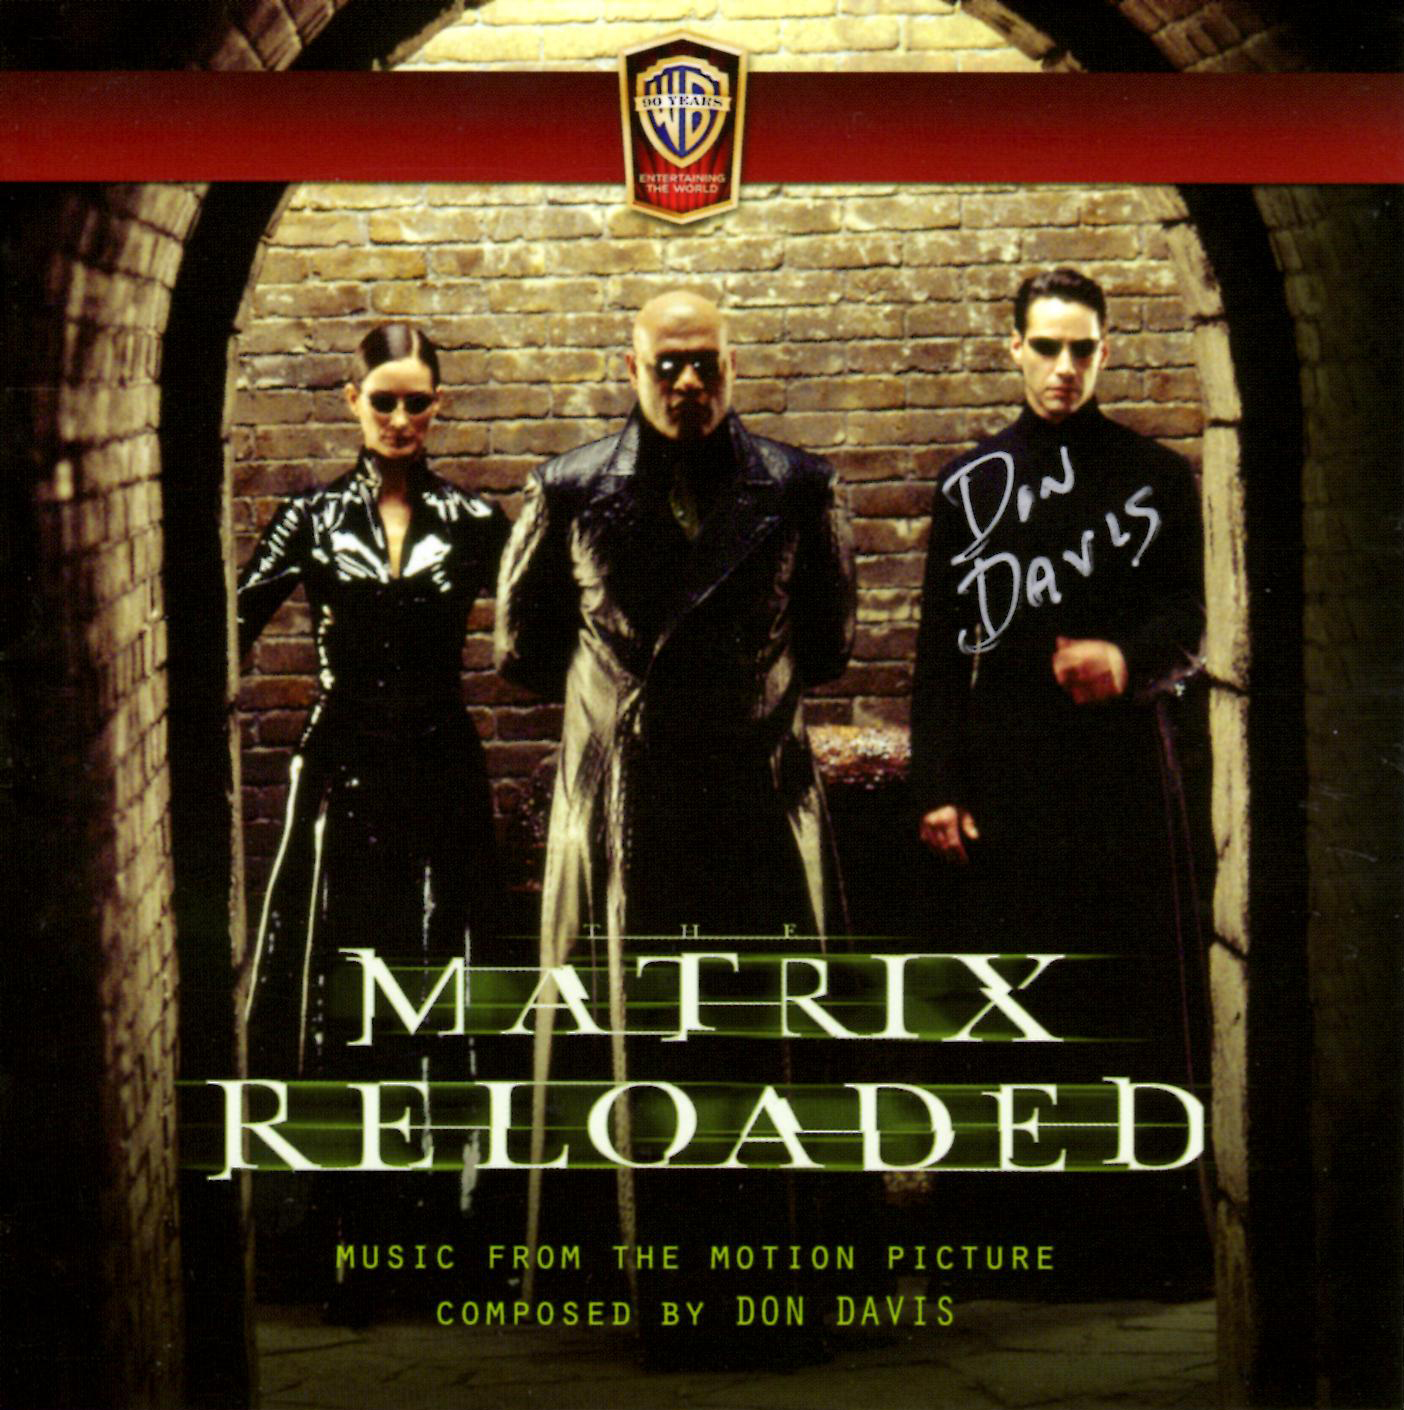 The Matrix Reloaded #9